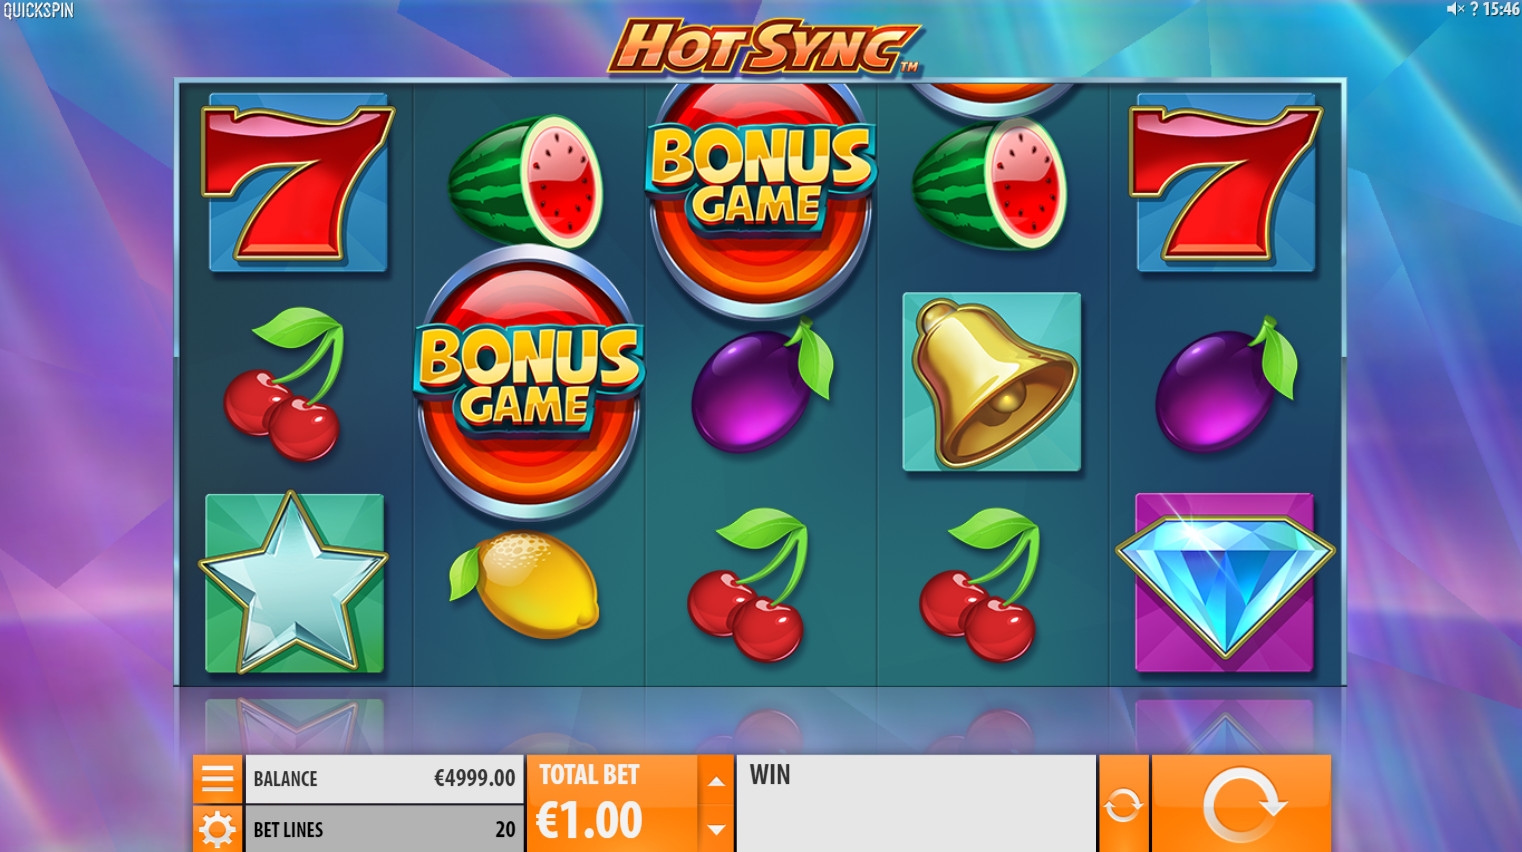 Hot Sync (Hot Sync) from category Slots